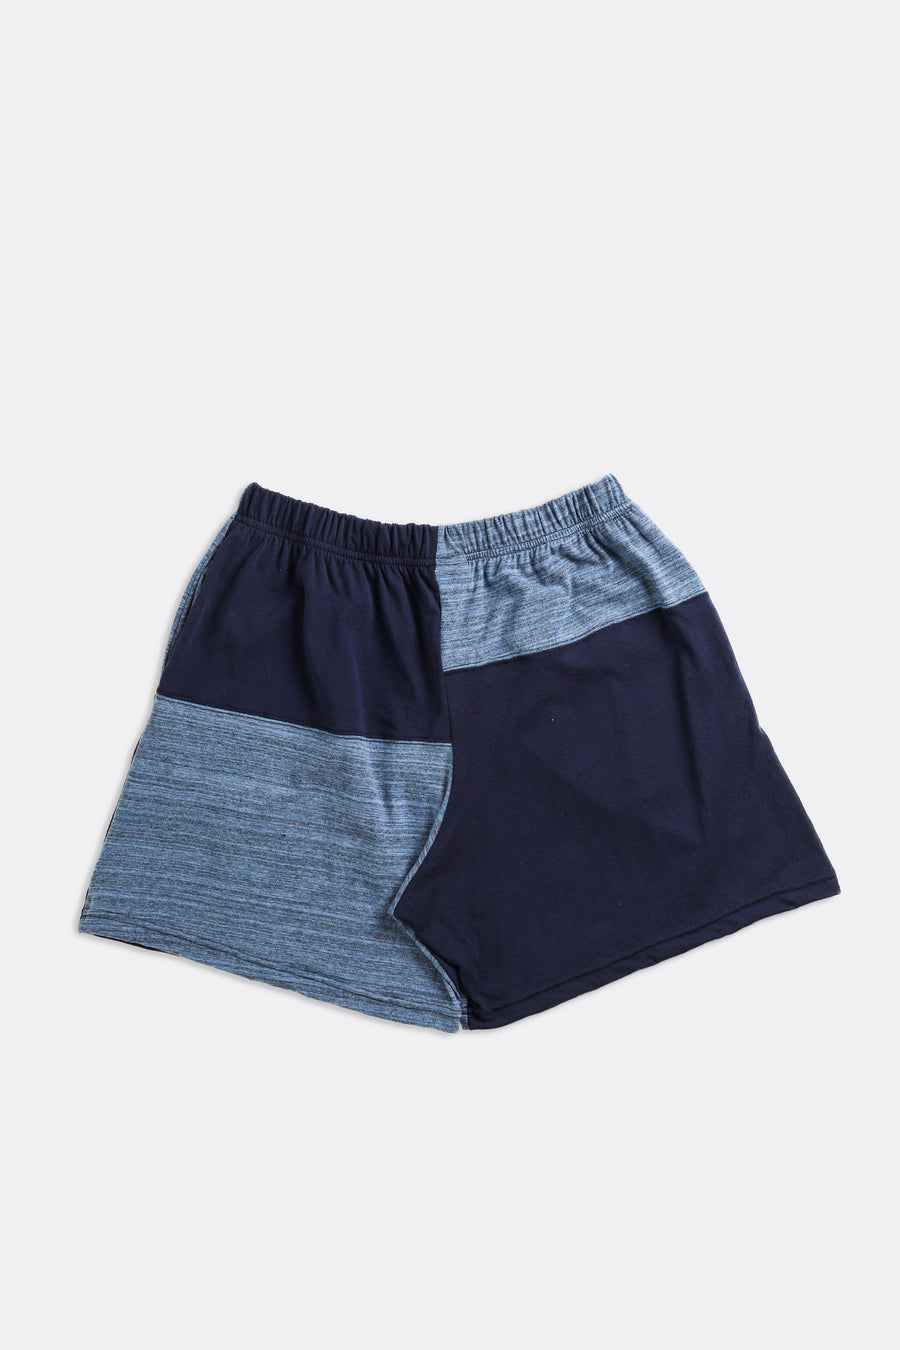 Unisex Rework Polo Patchwork Tee Shorts - Women's M, Men's S